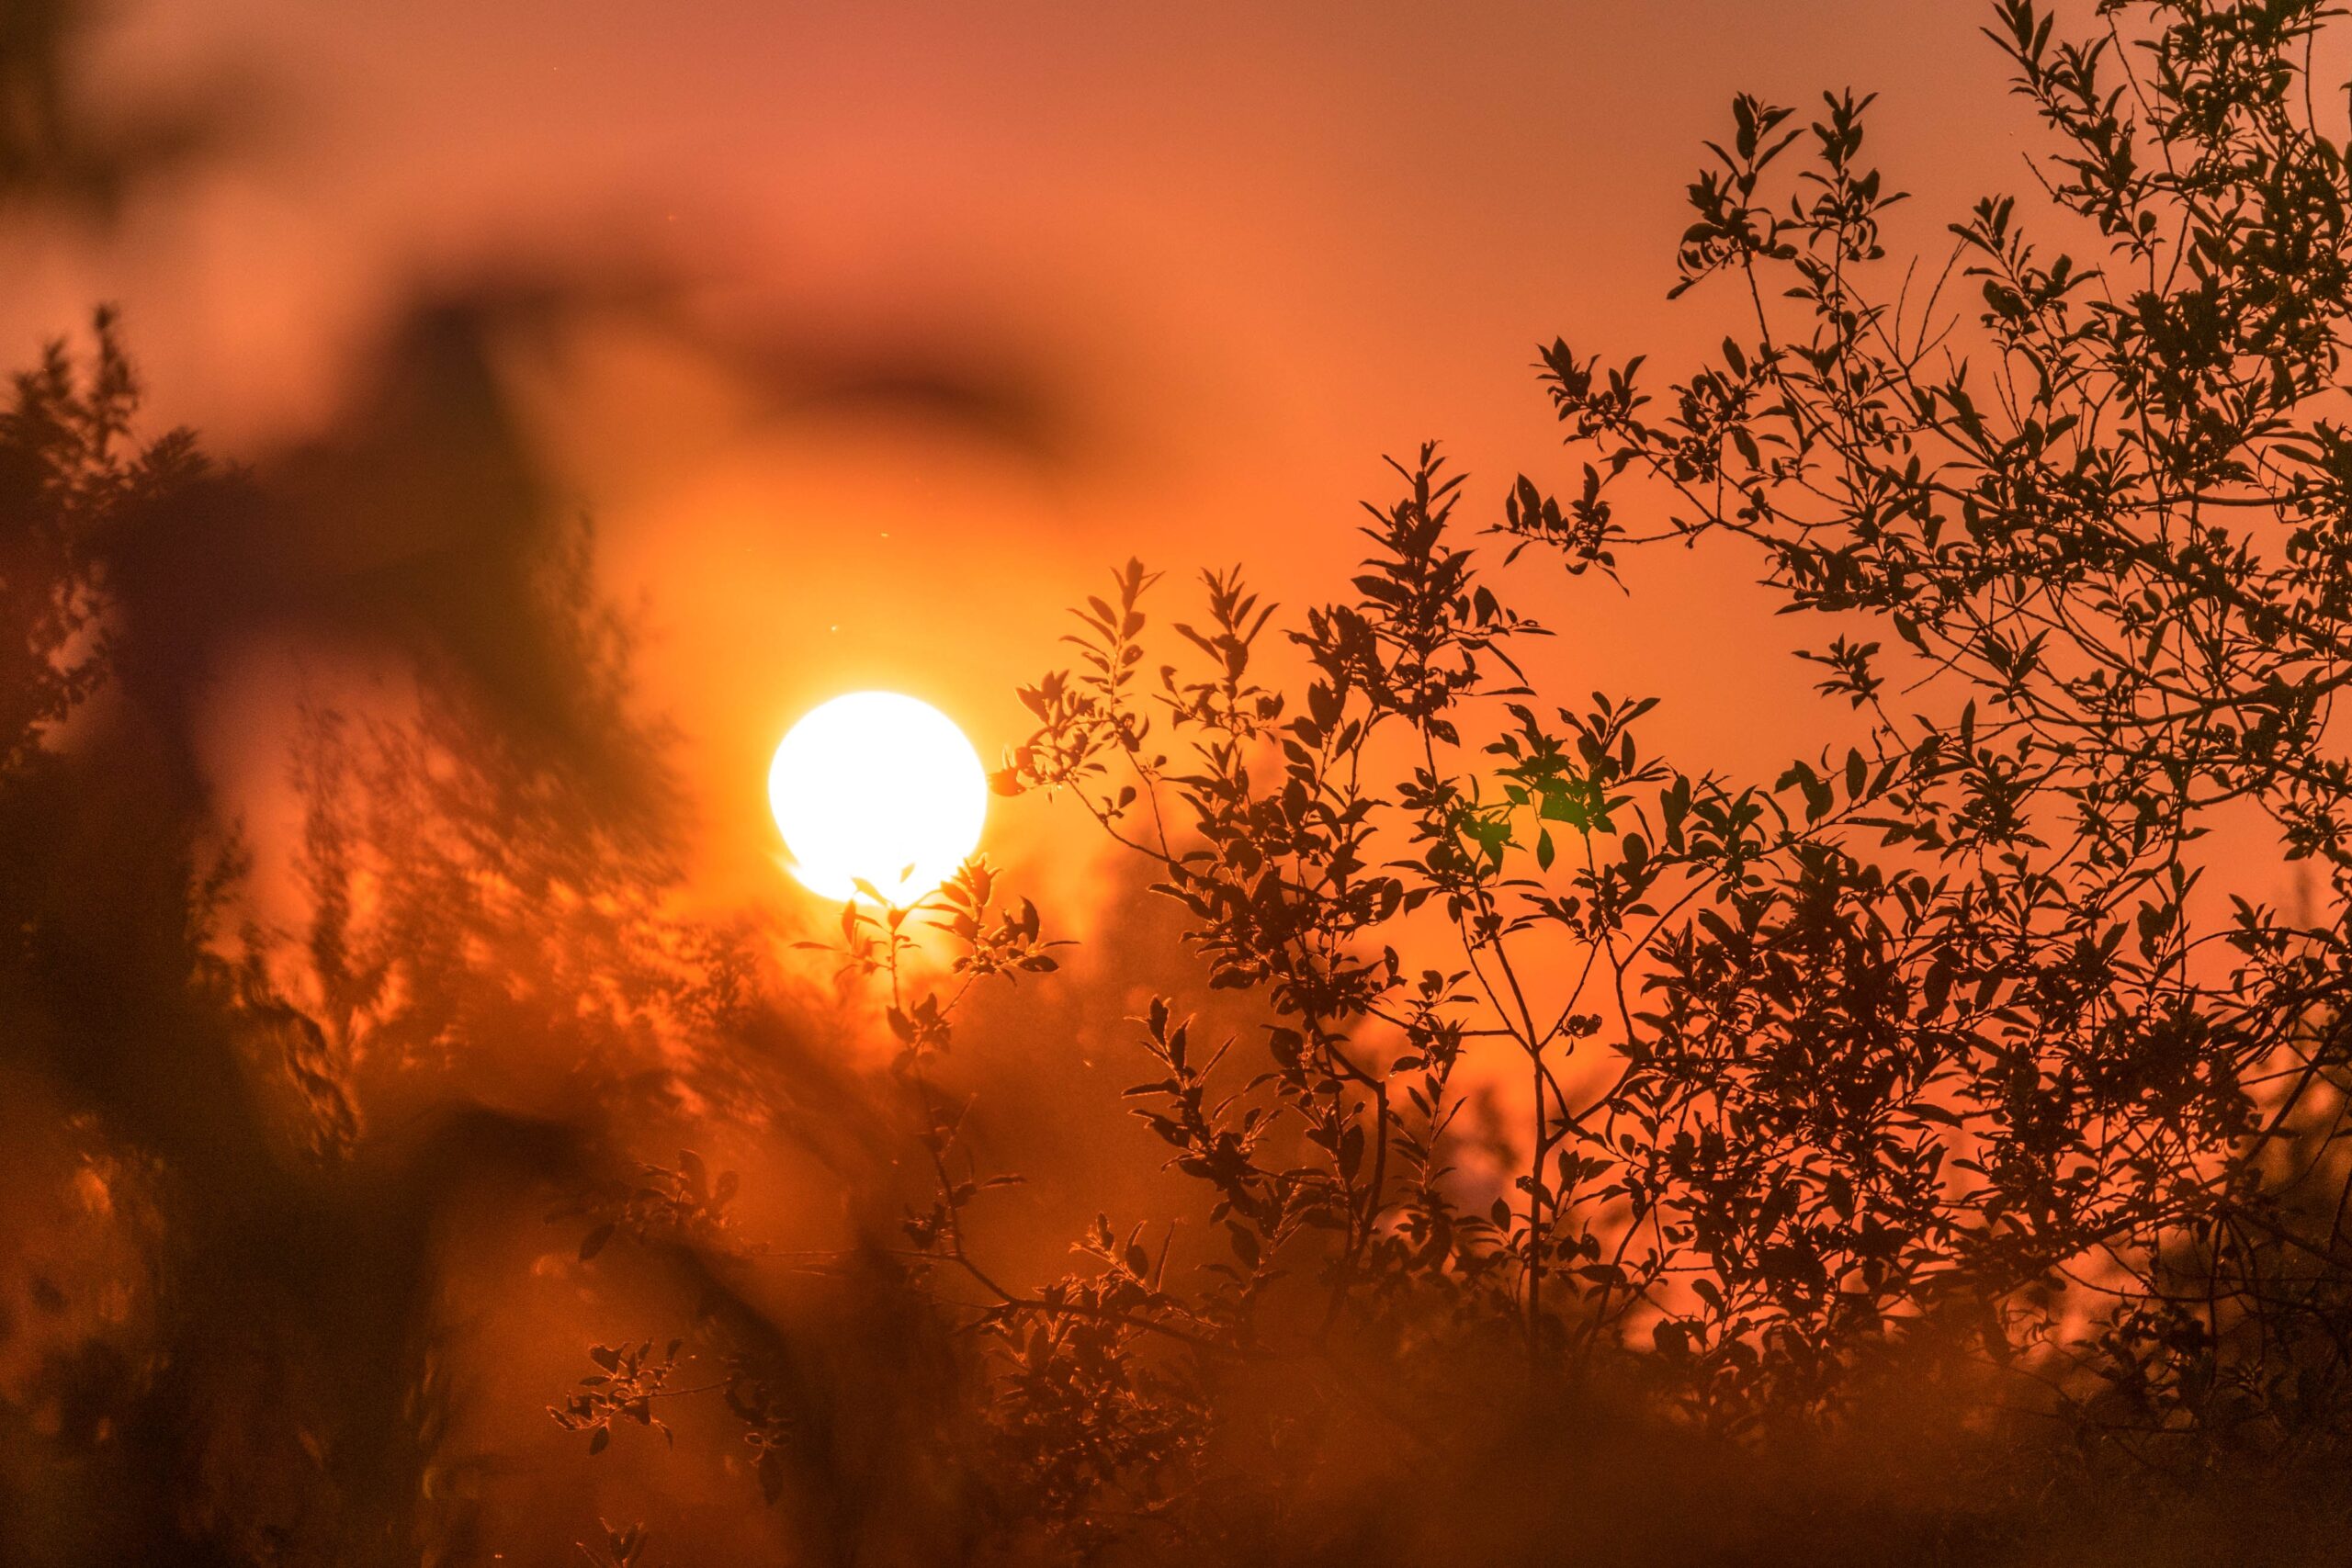 Sunrise. Photo by Ant Rozetsky on Unsplash